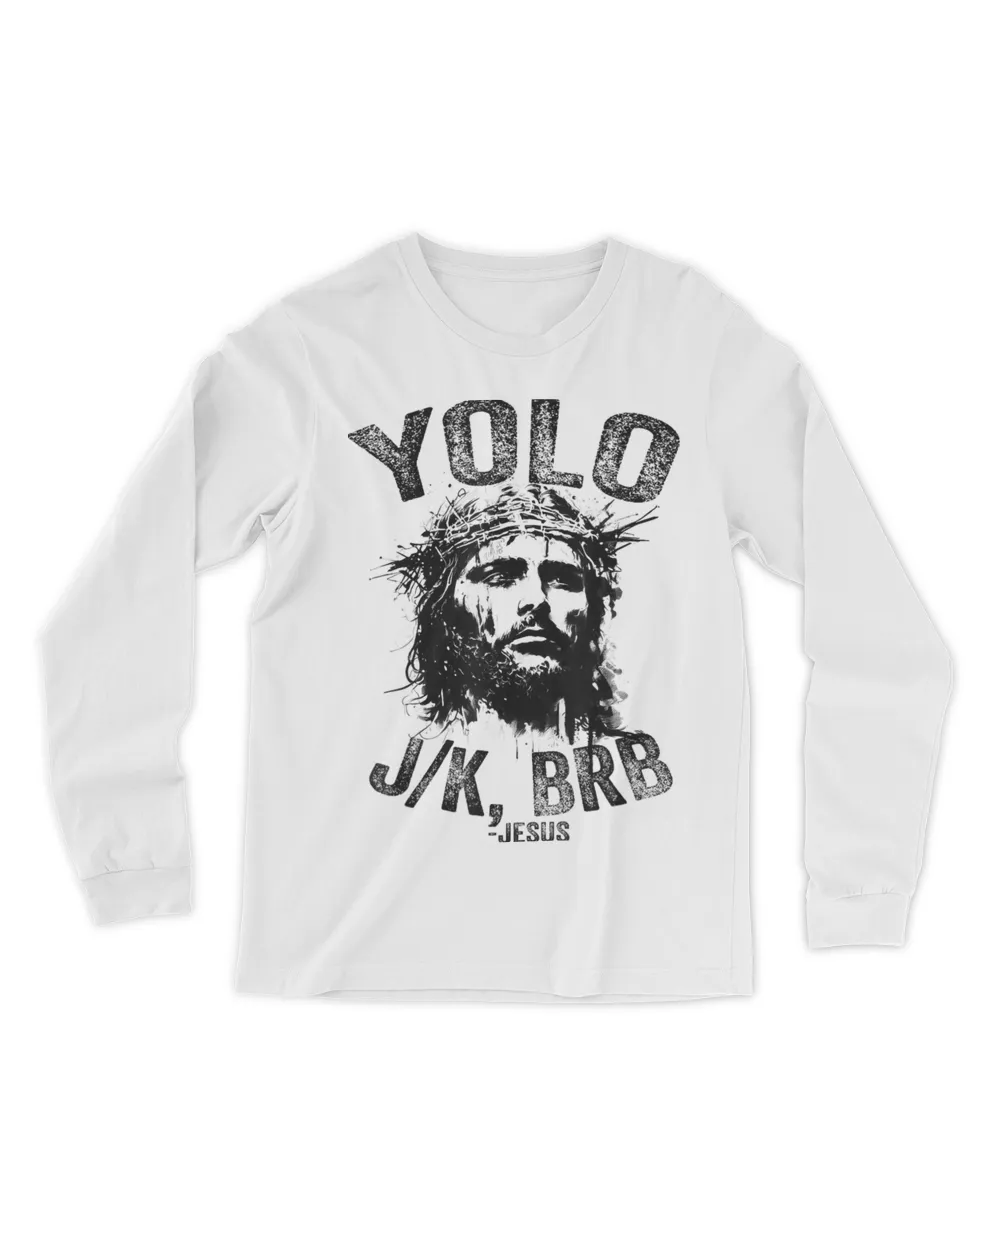 Yolo Jk Brb Jesus Funny Resurrection Christians Easter Day T-Shirt